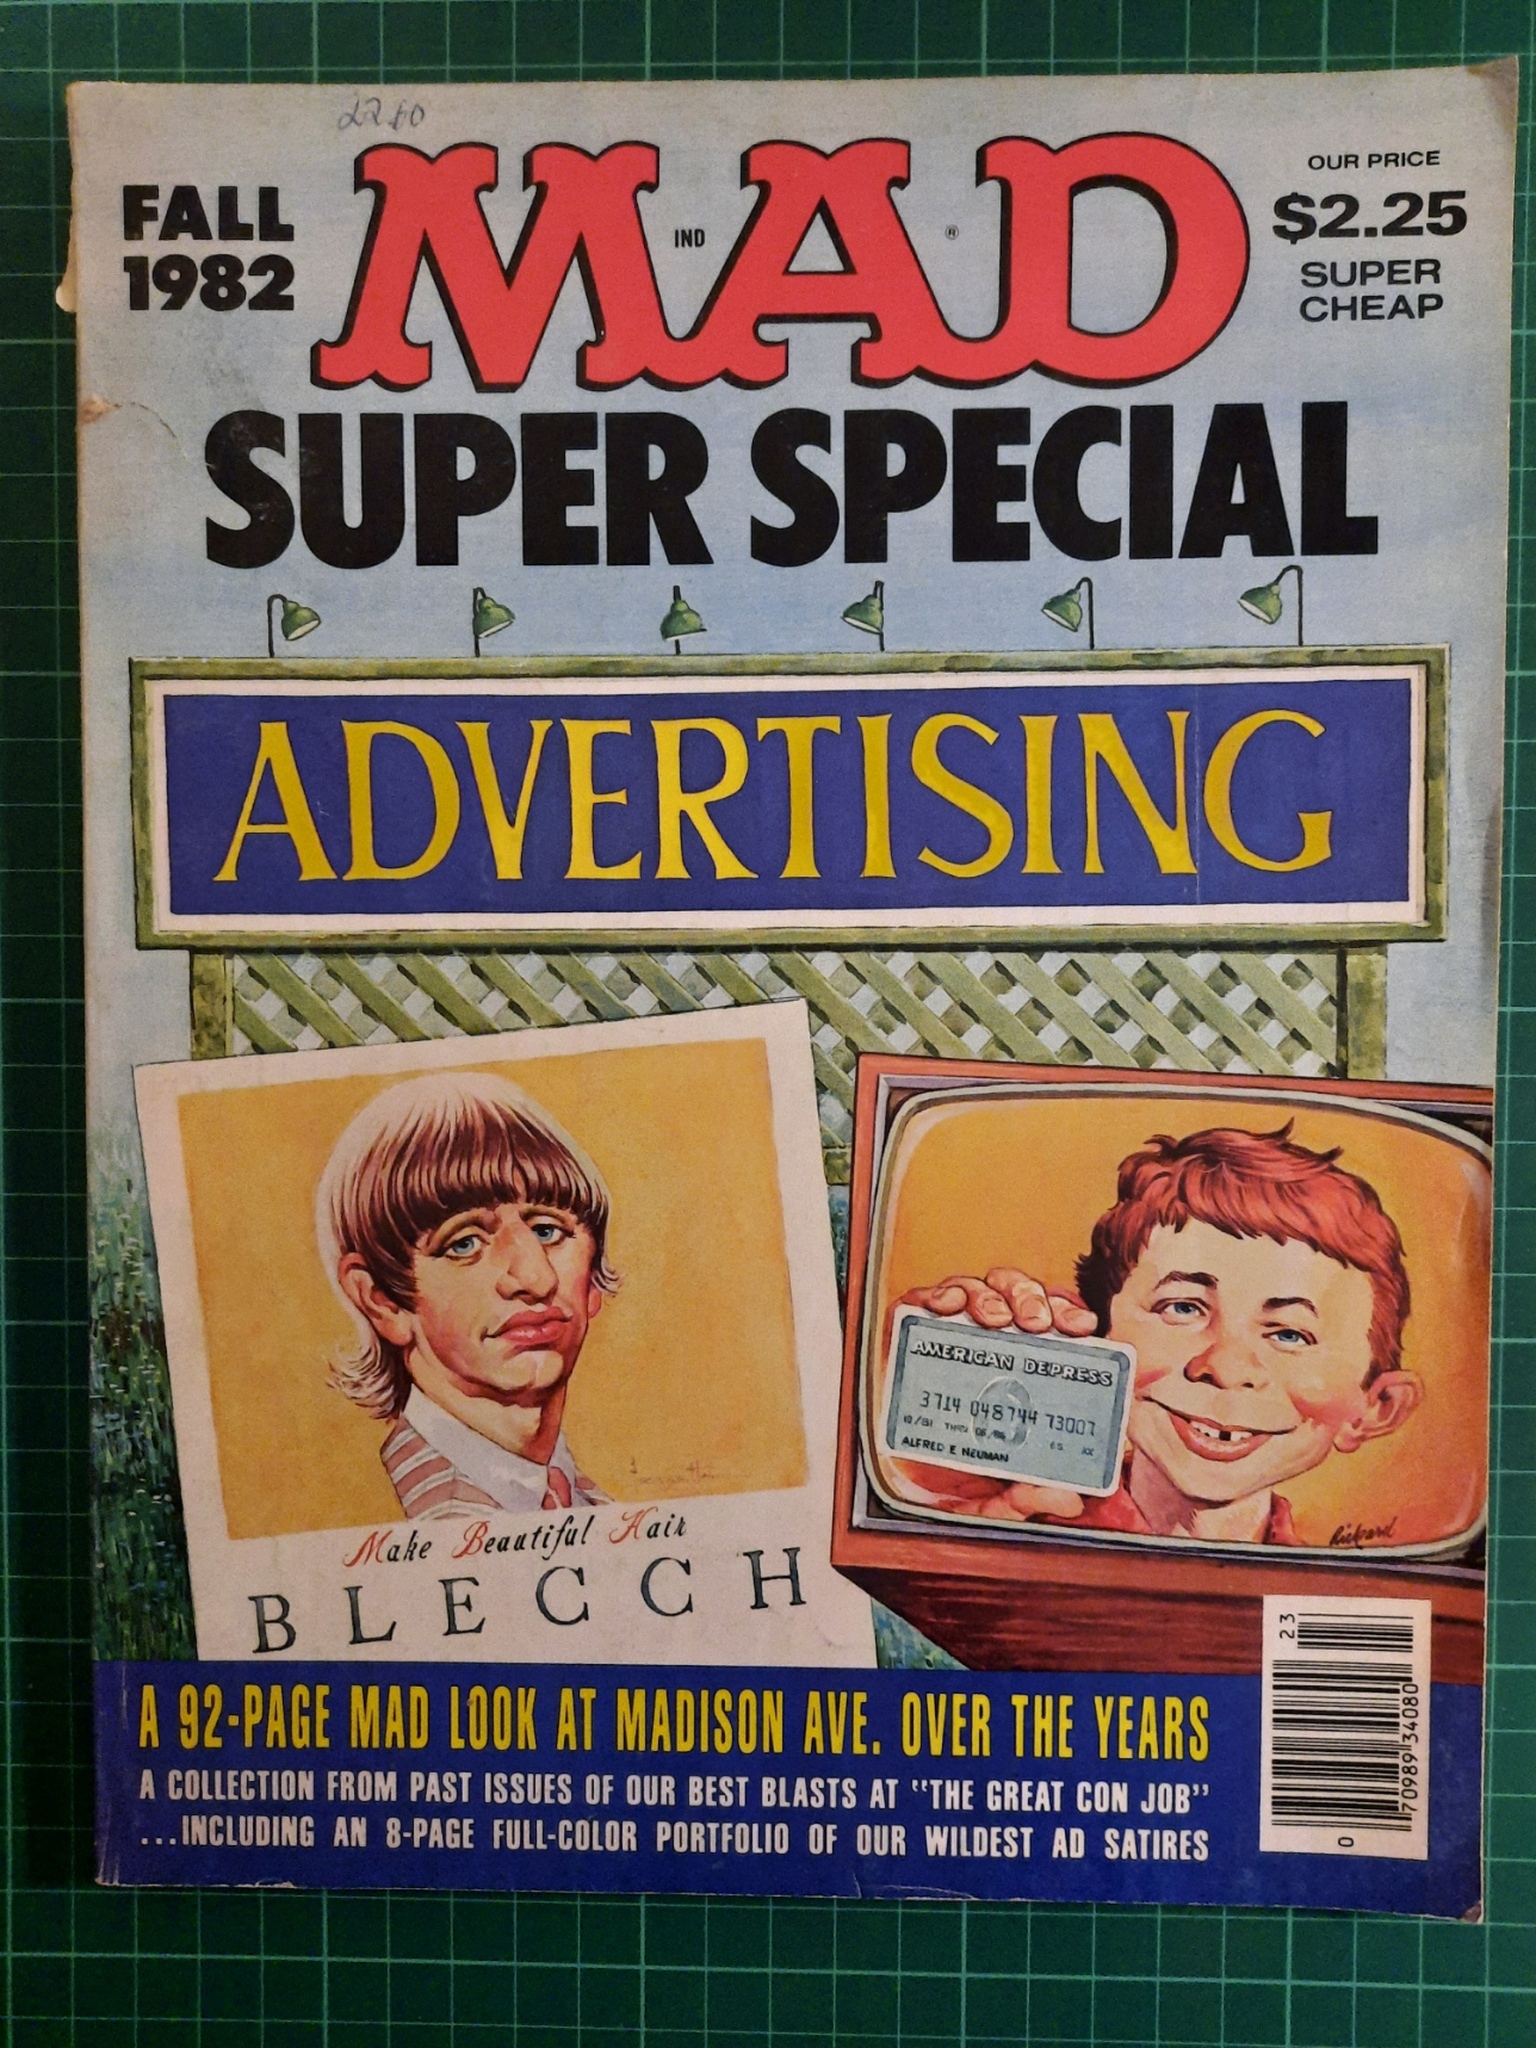 USA Mad Super Special, Fall 1982